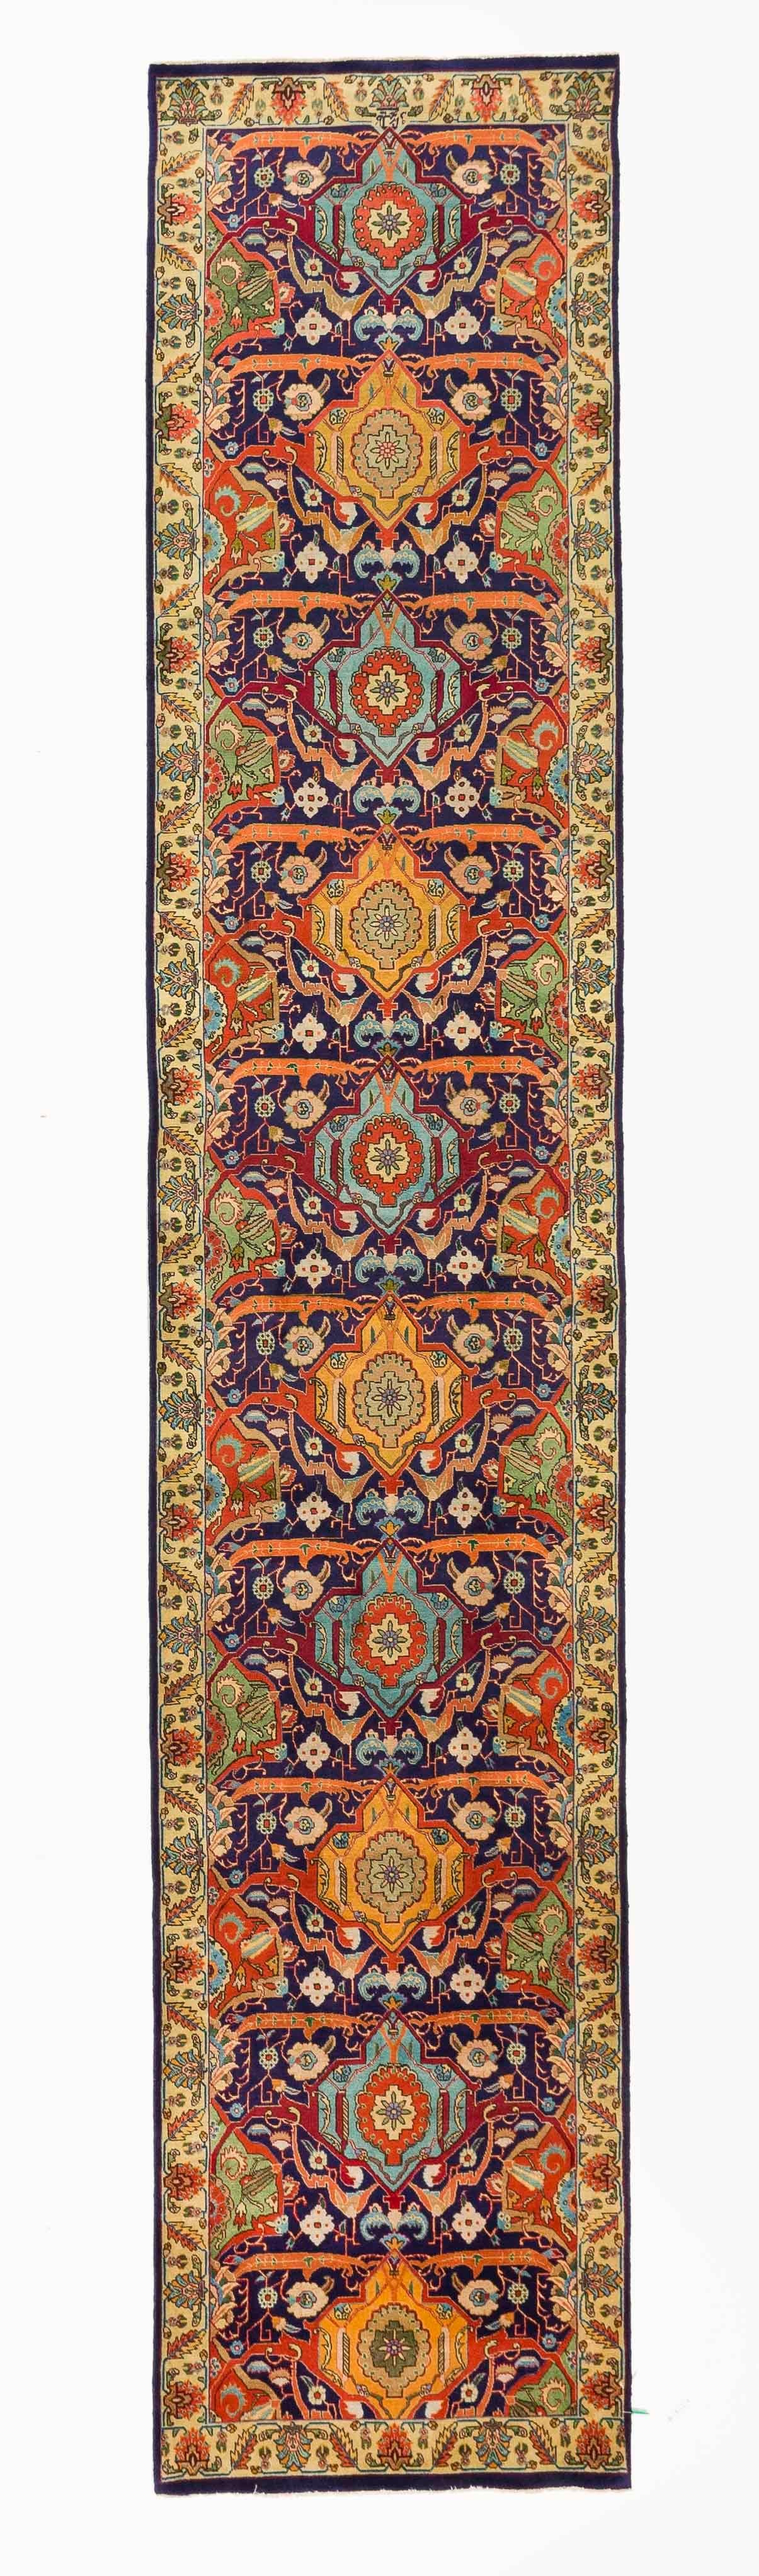 Special Twin Antique Persian Rug in Ornate Tabriz Design, circa 1950s In Excellent Condition For Sale In Dallas, TX